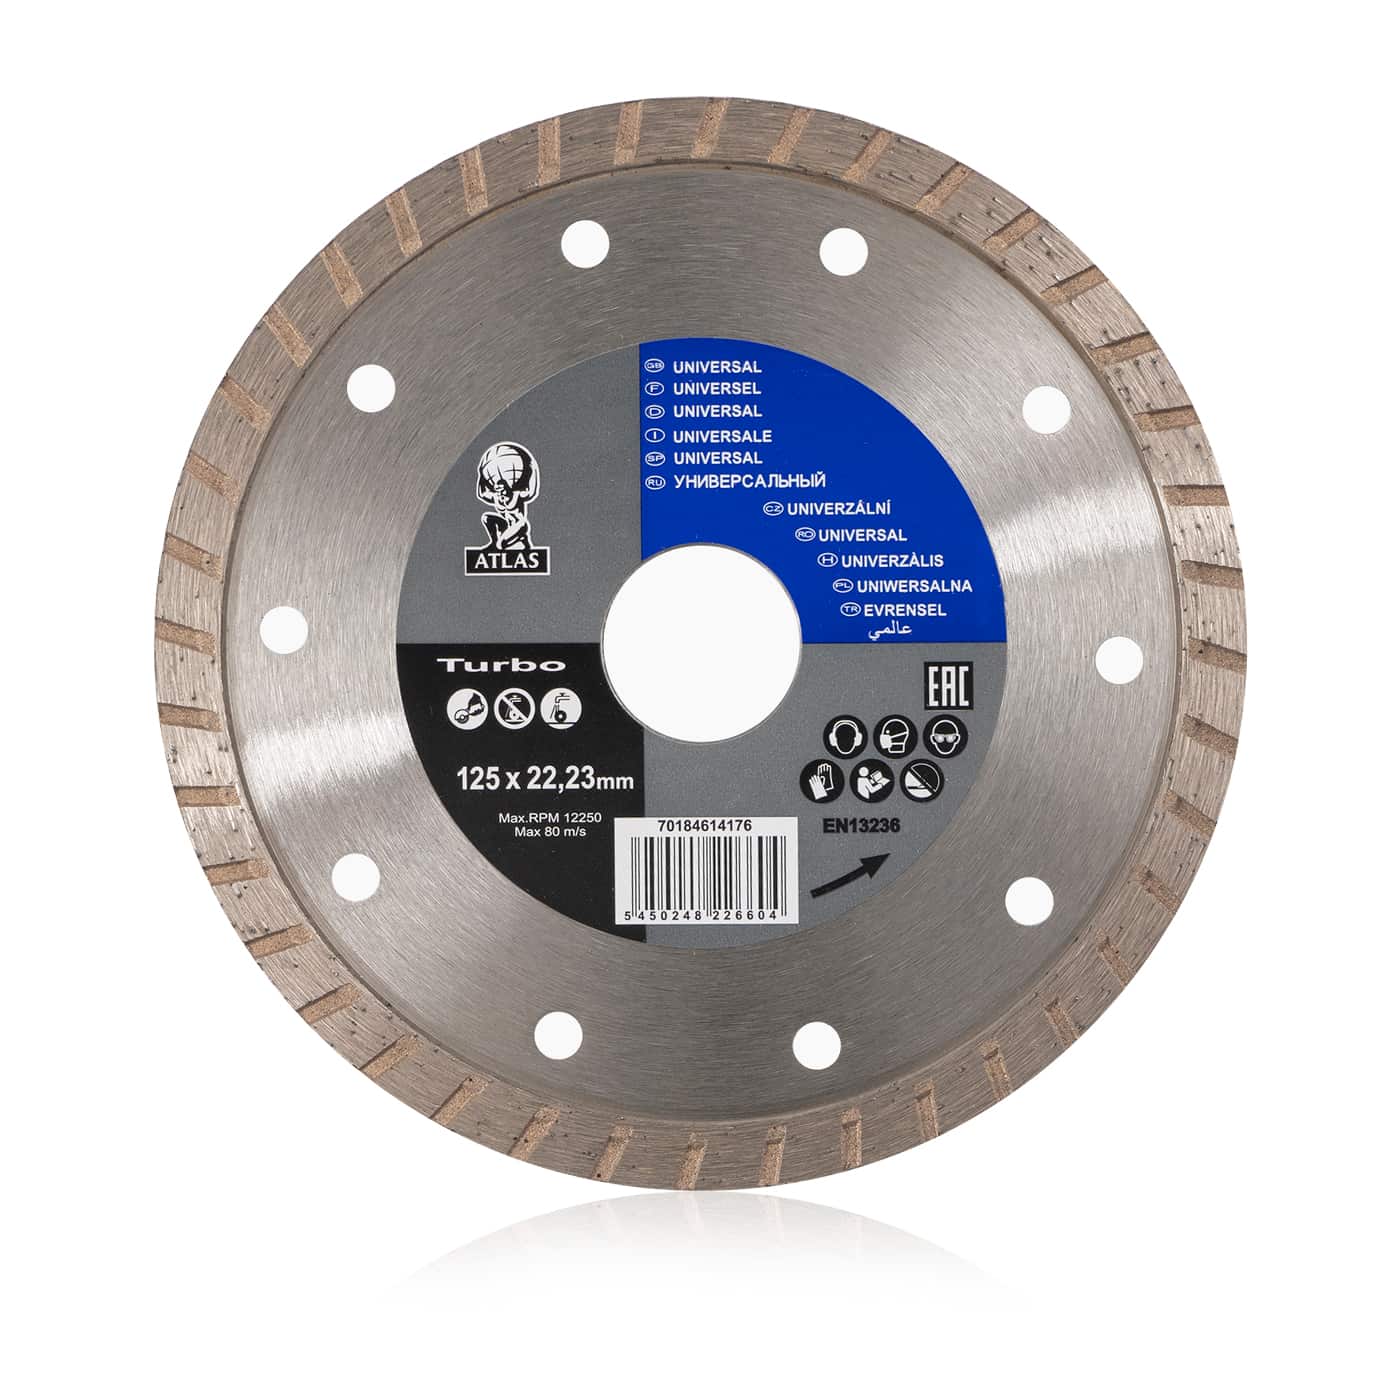 smirdex-916-atlas-universal-diamond-discs,clean cut, fast cut, building materials cutting